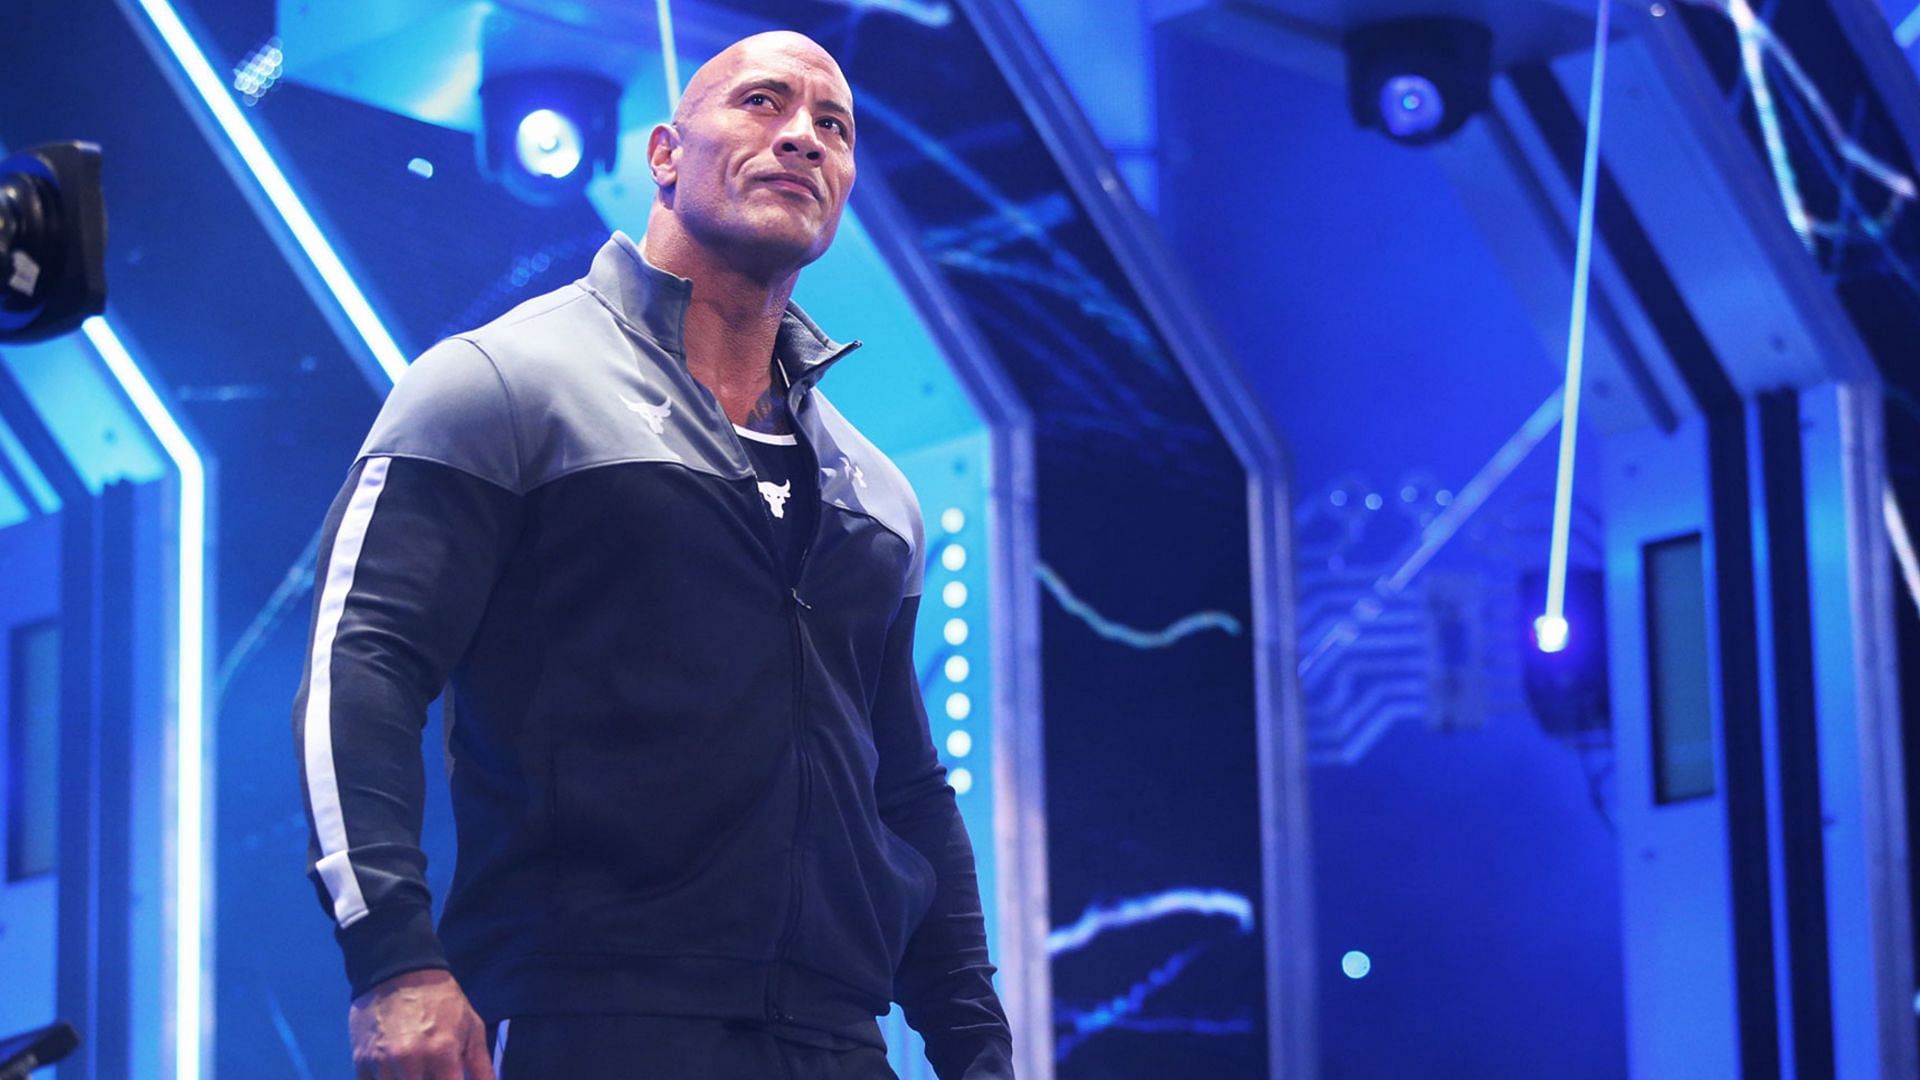 The Rock returned to WWE SmackDown last September